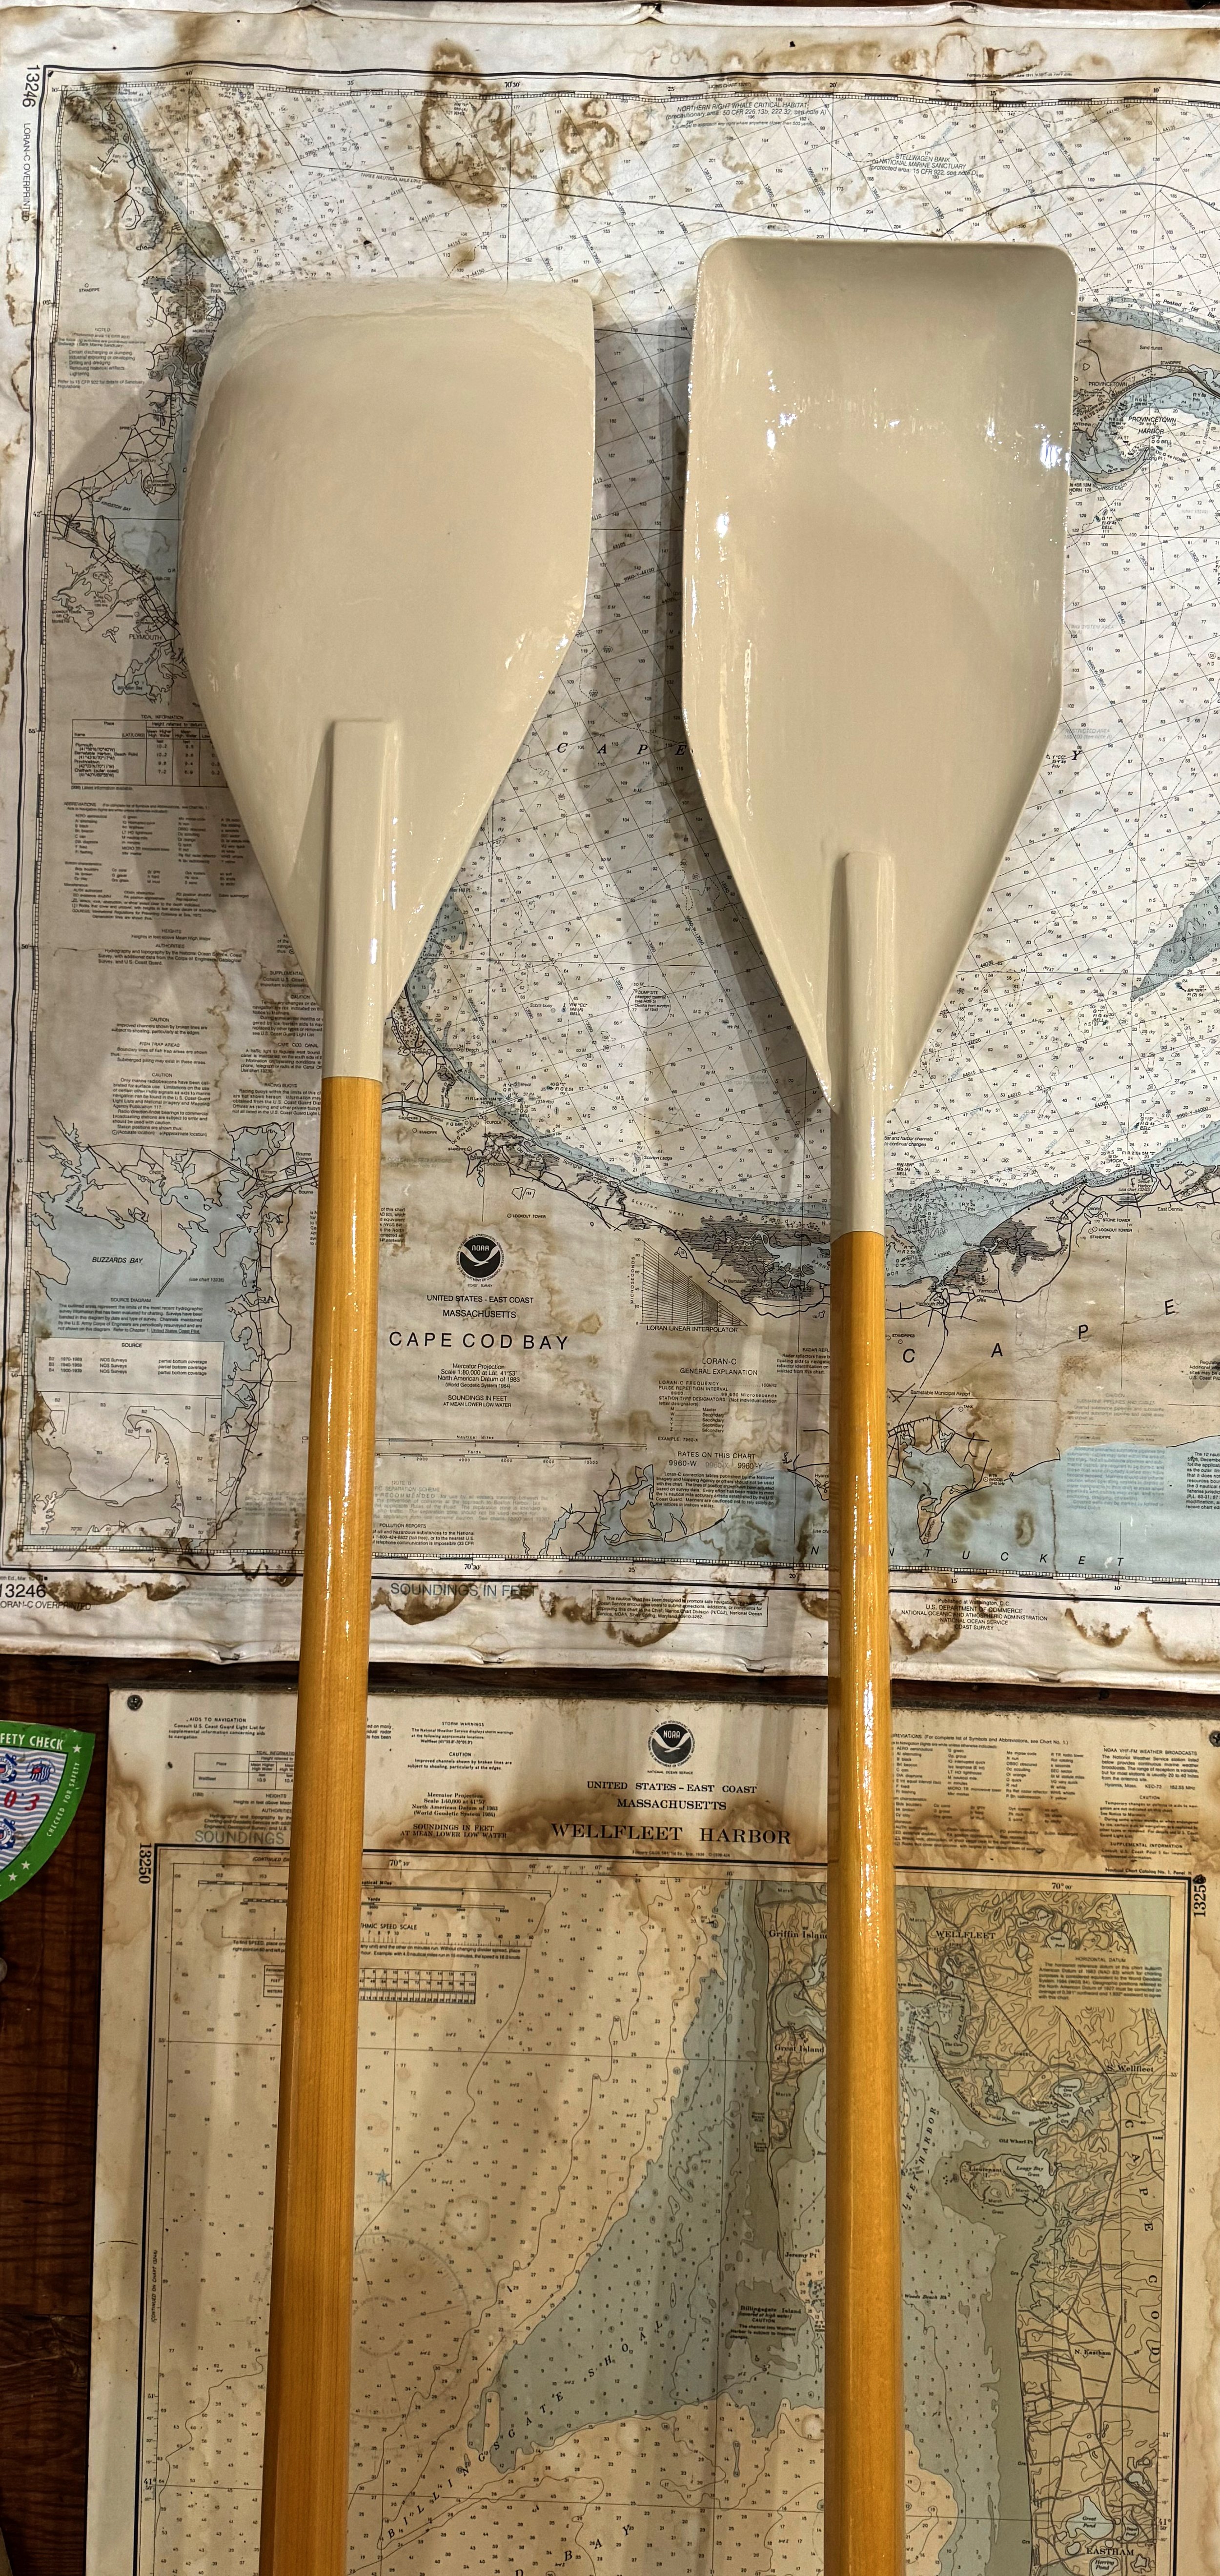 Shop made Gaco oars